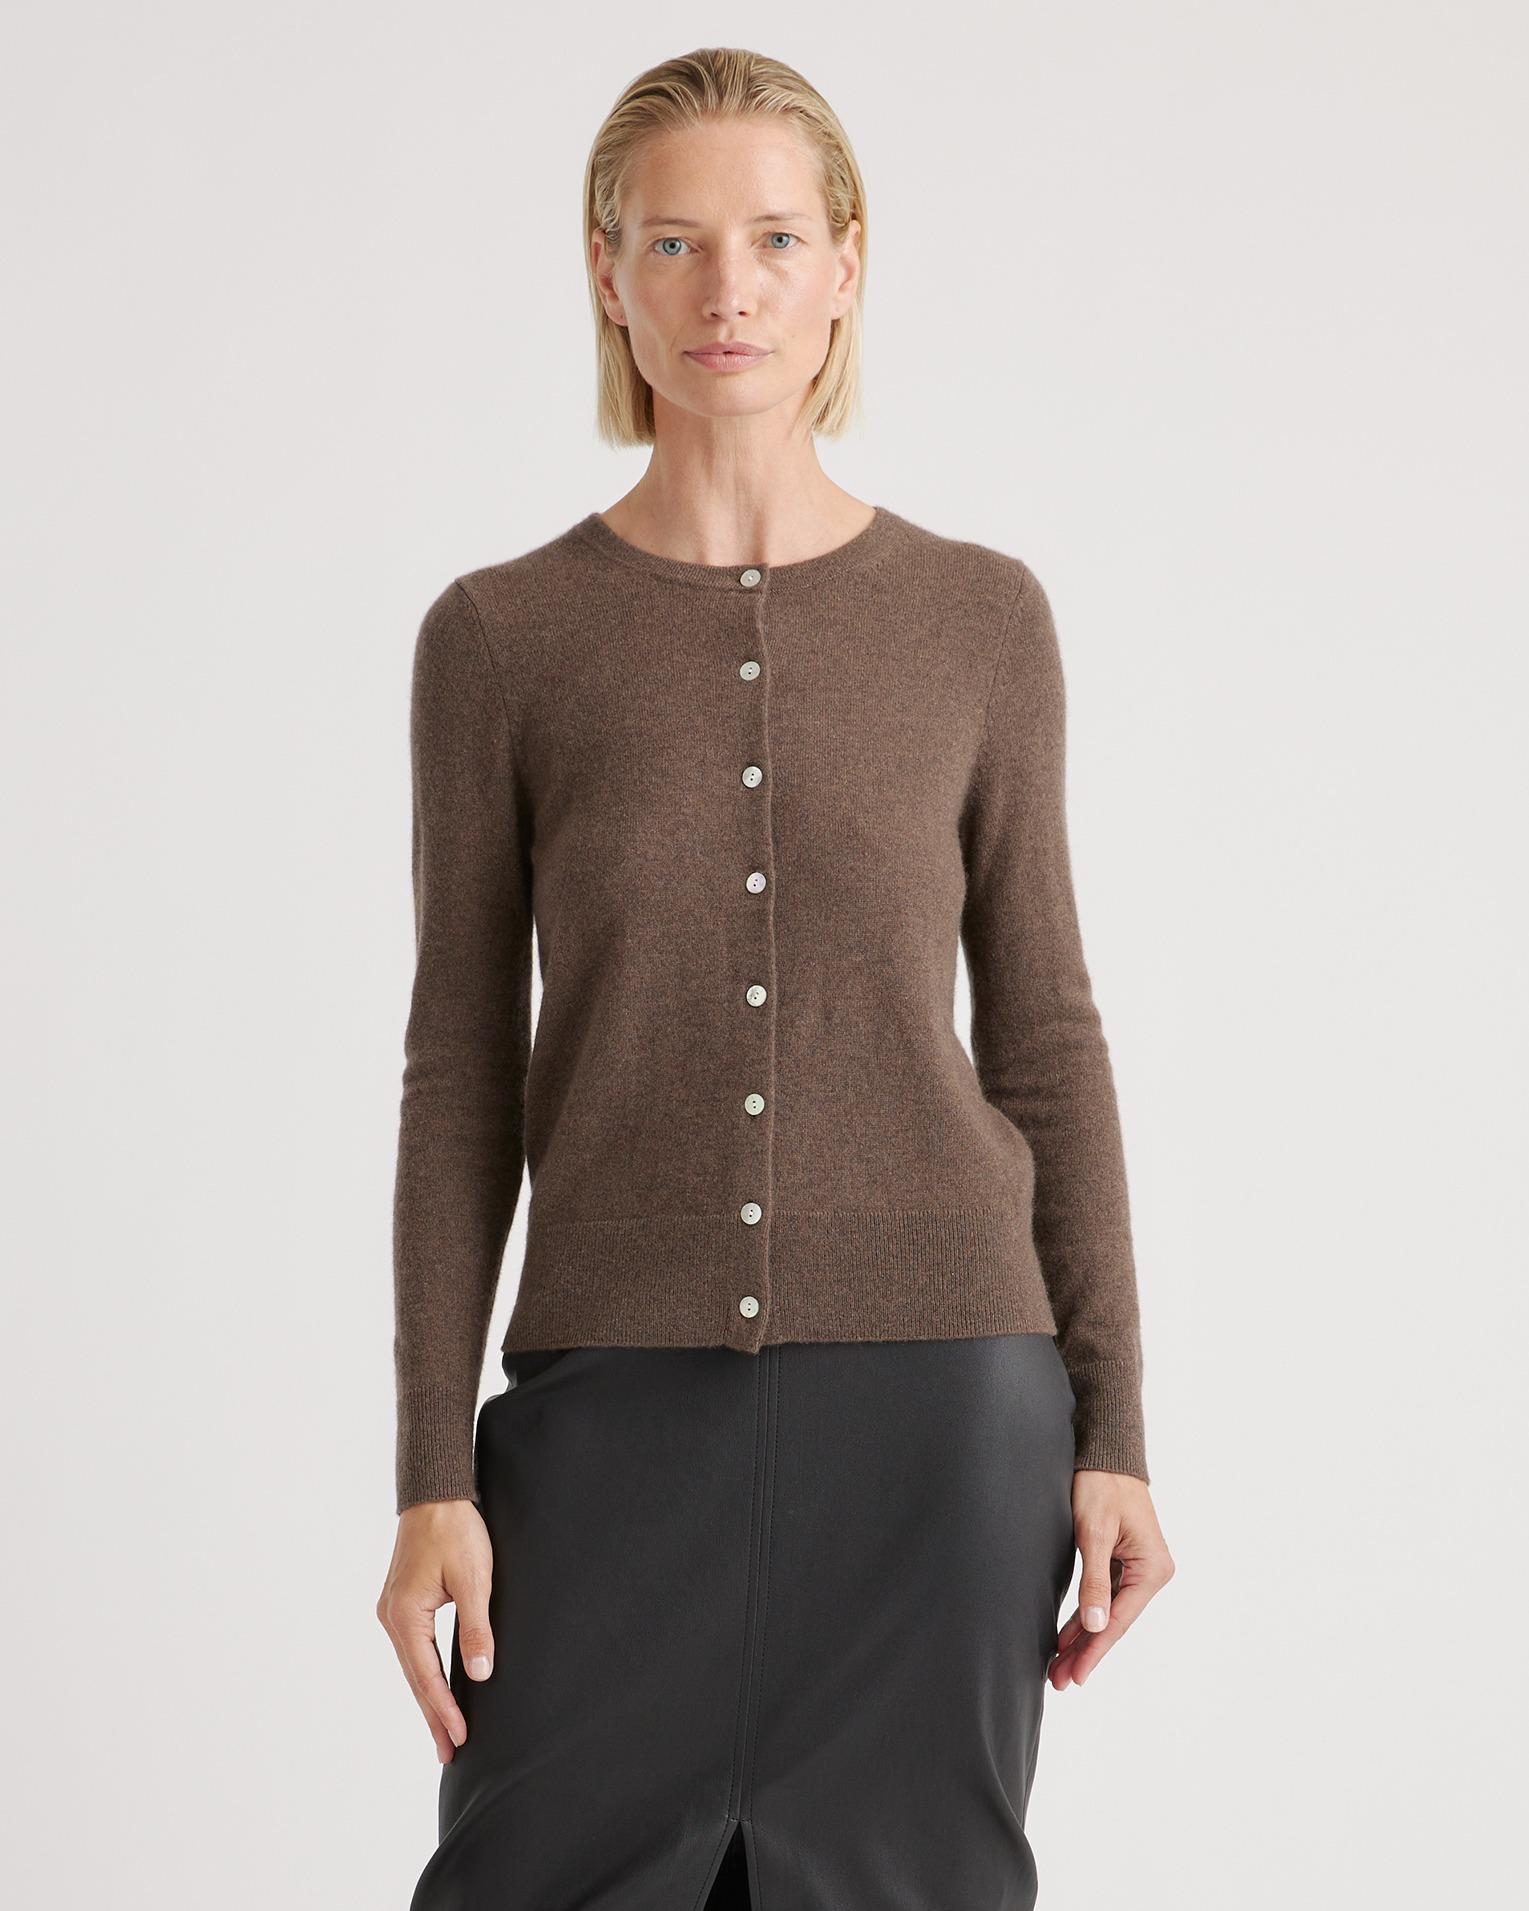 Women's Mongolian Cashmere Cardigan Sweater Product Image